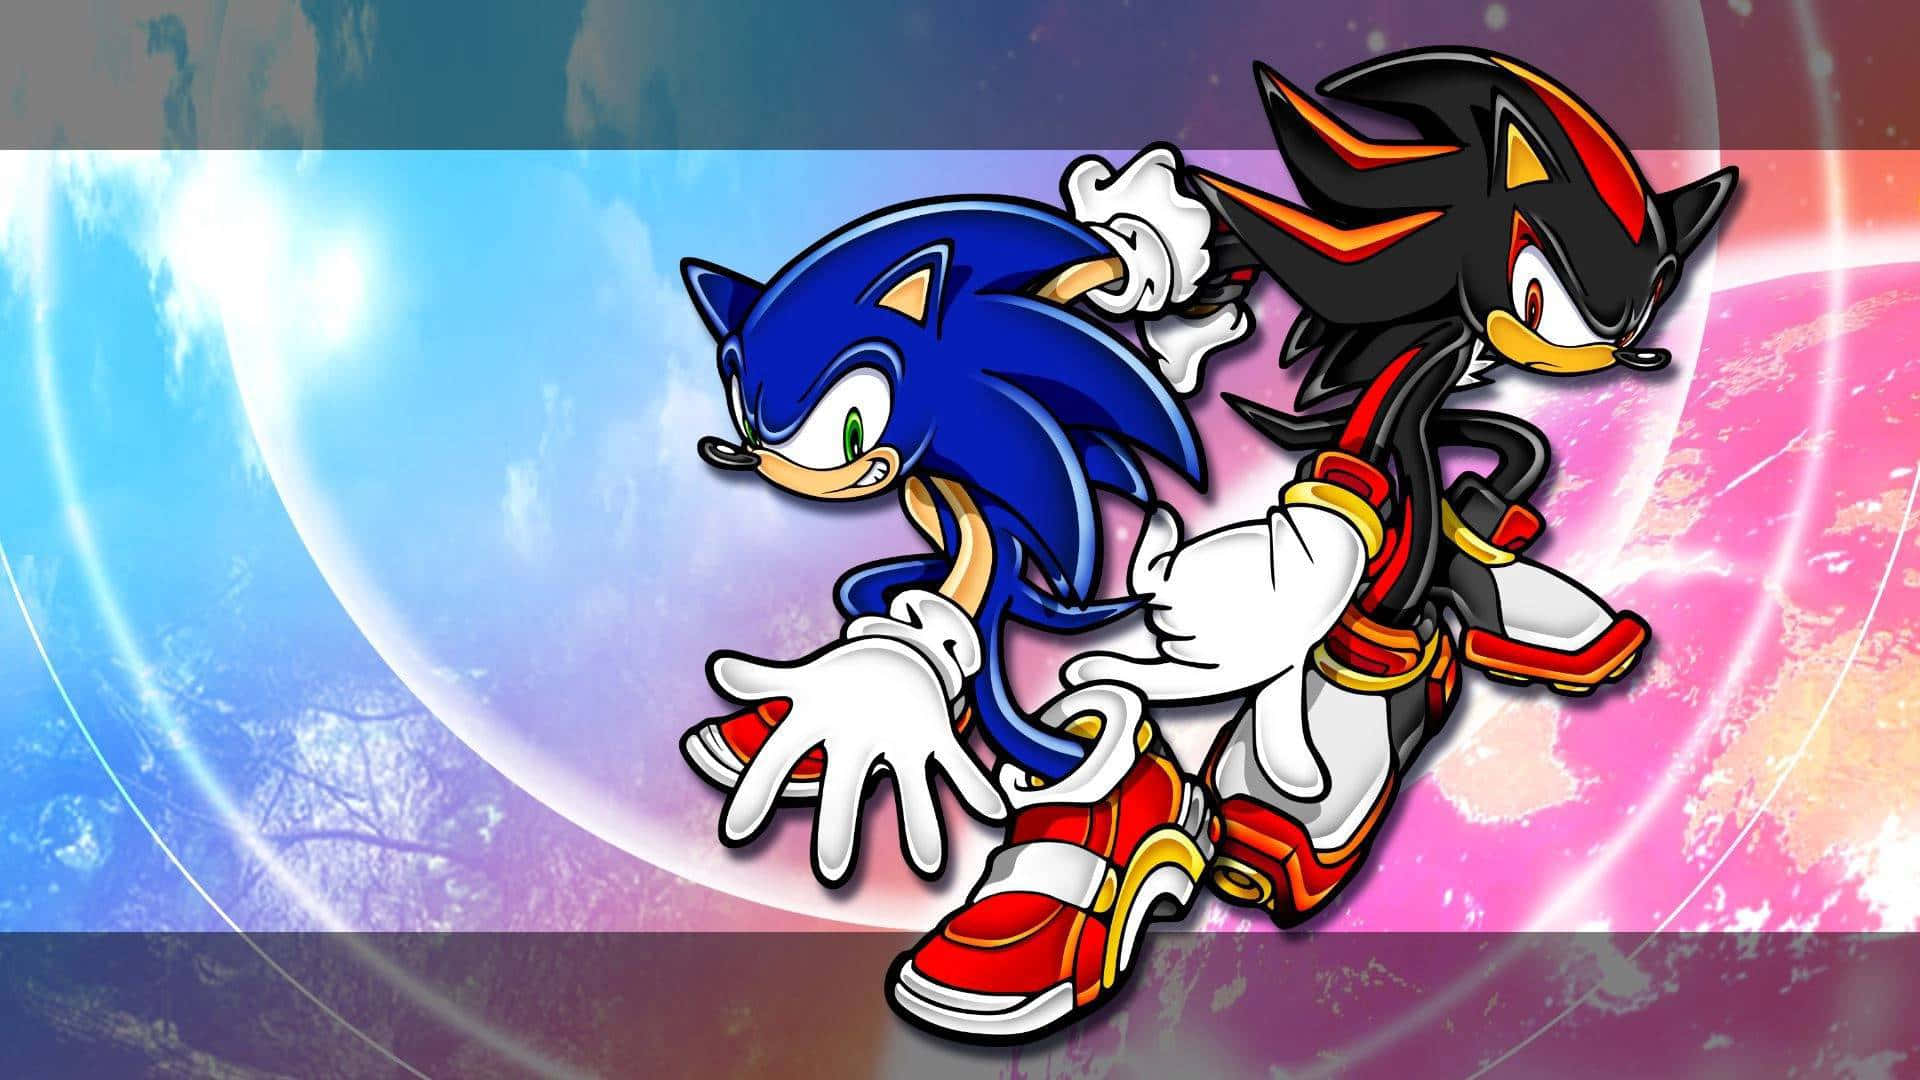 Vibrant Sonic the Hedgehog Fan Art Wallpaper